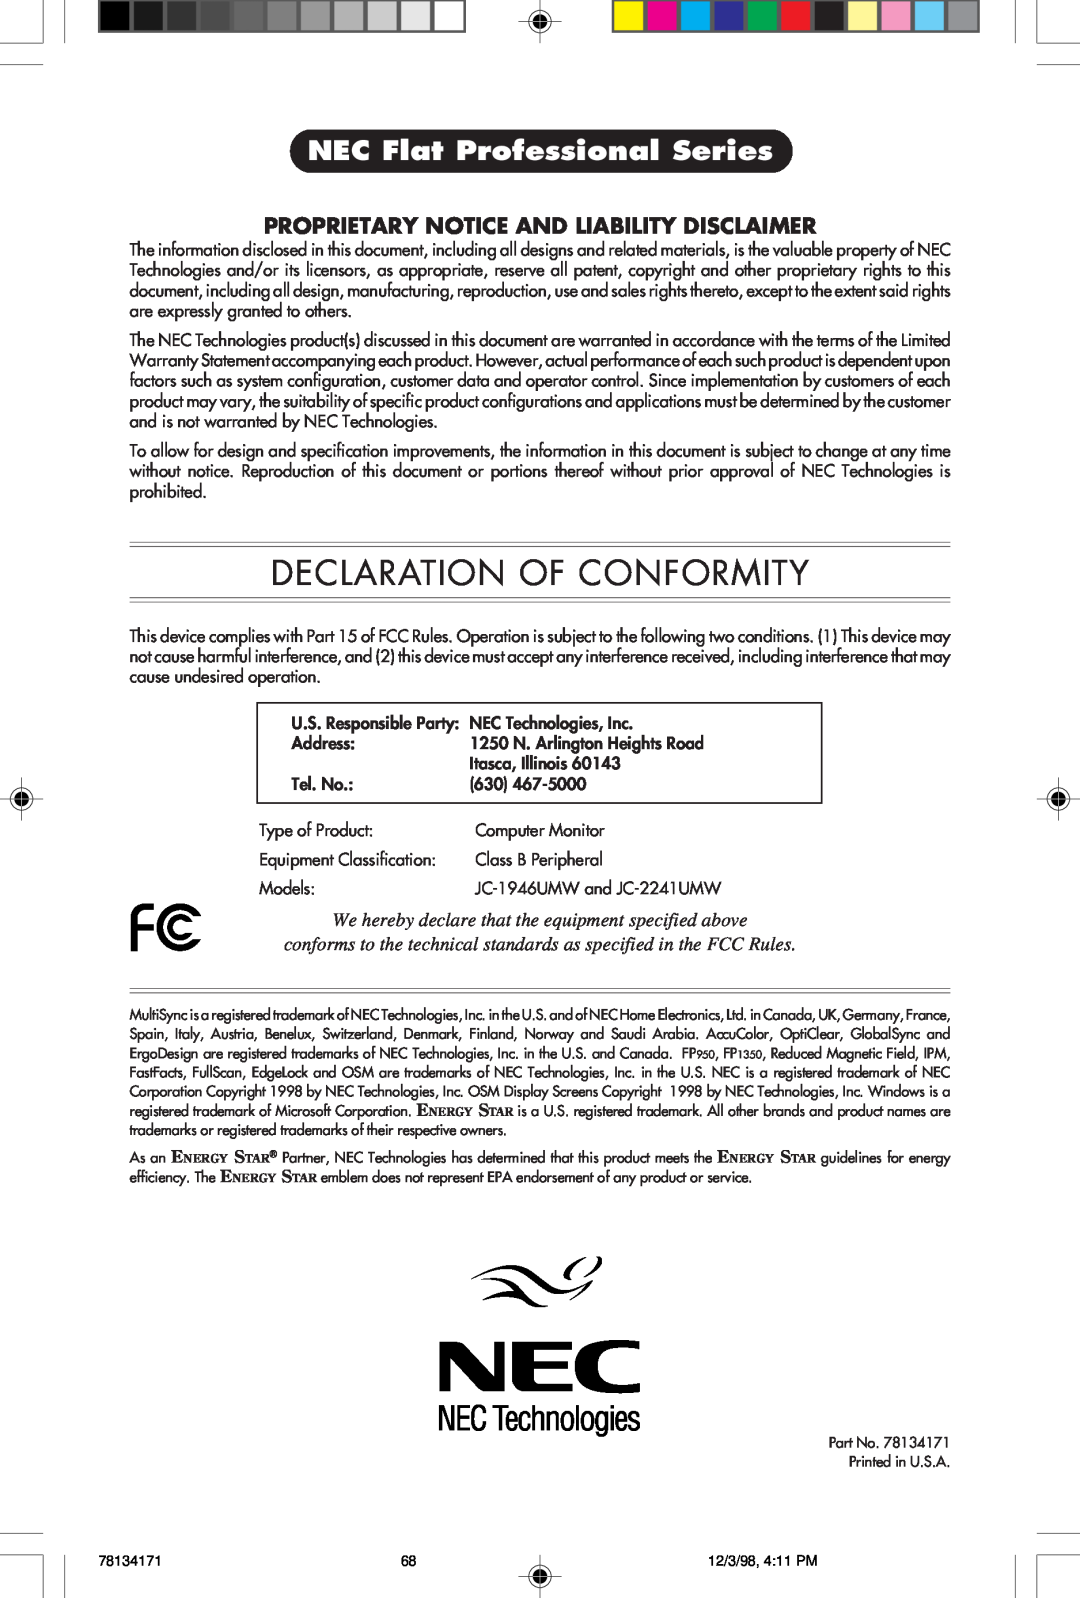 NEC JC-2241UMW Declaration Of Conformity, NEC Flat Professional Series, Proprietary Notice And Liability Disclaimer 